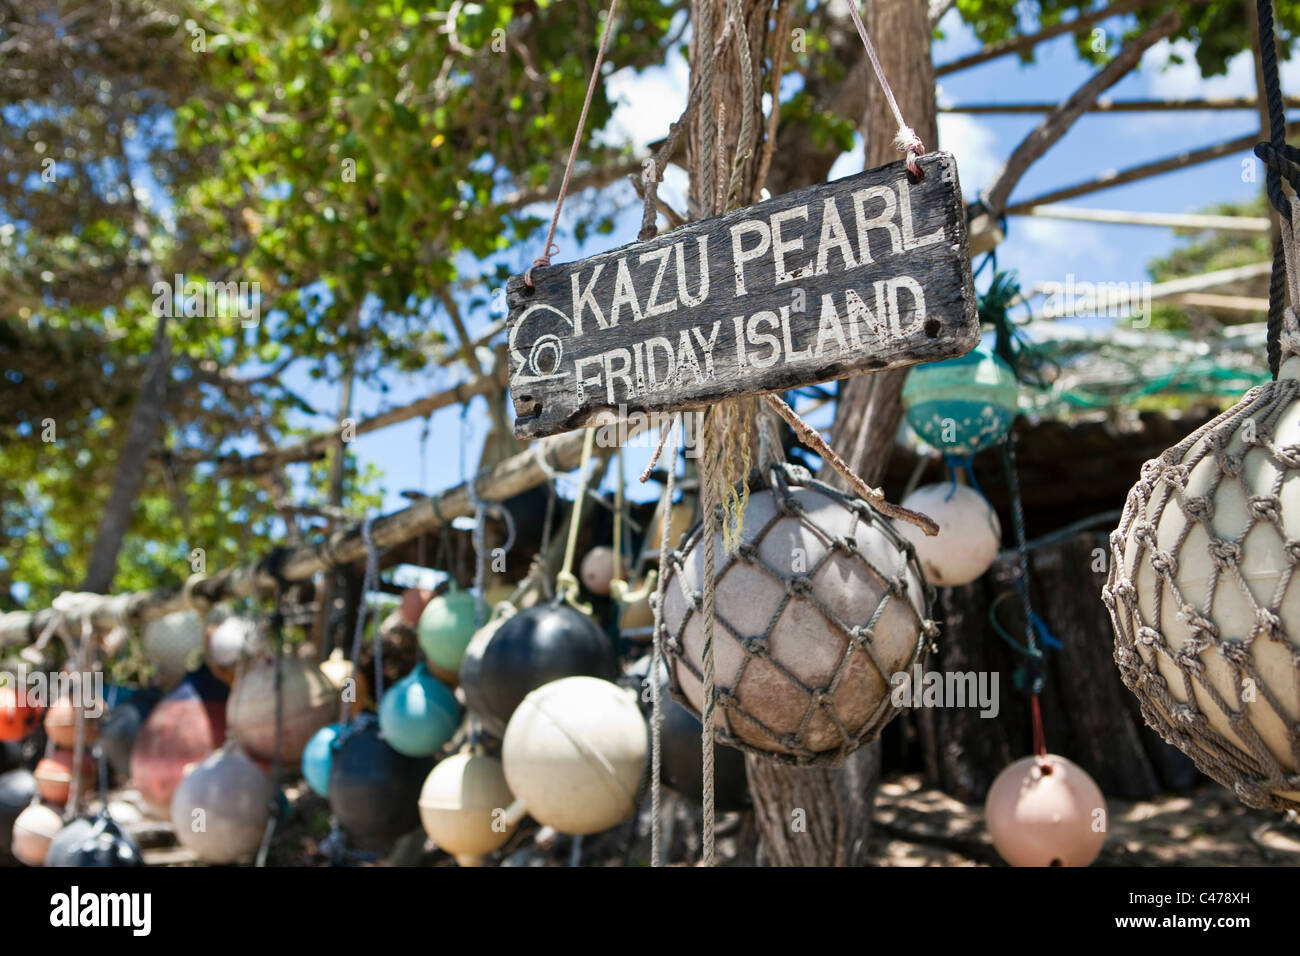 Kazu Perle a venerdì Isola, Torres Strait Islands, Queensland, Australia Foto Stock